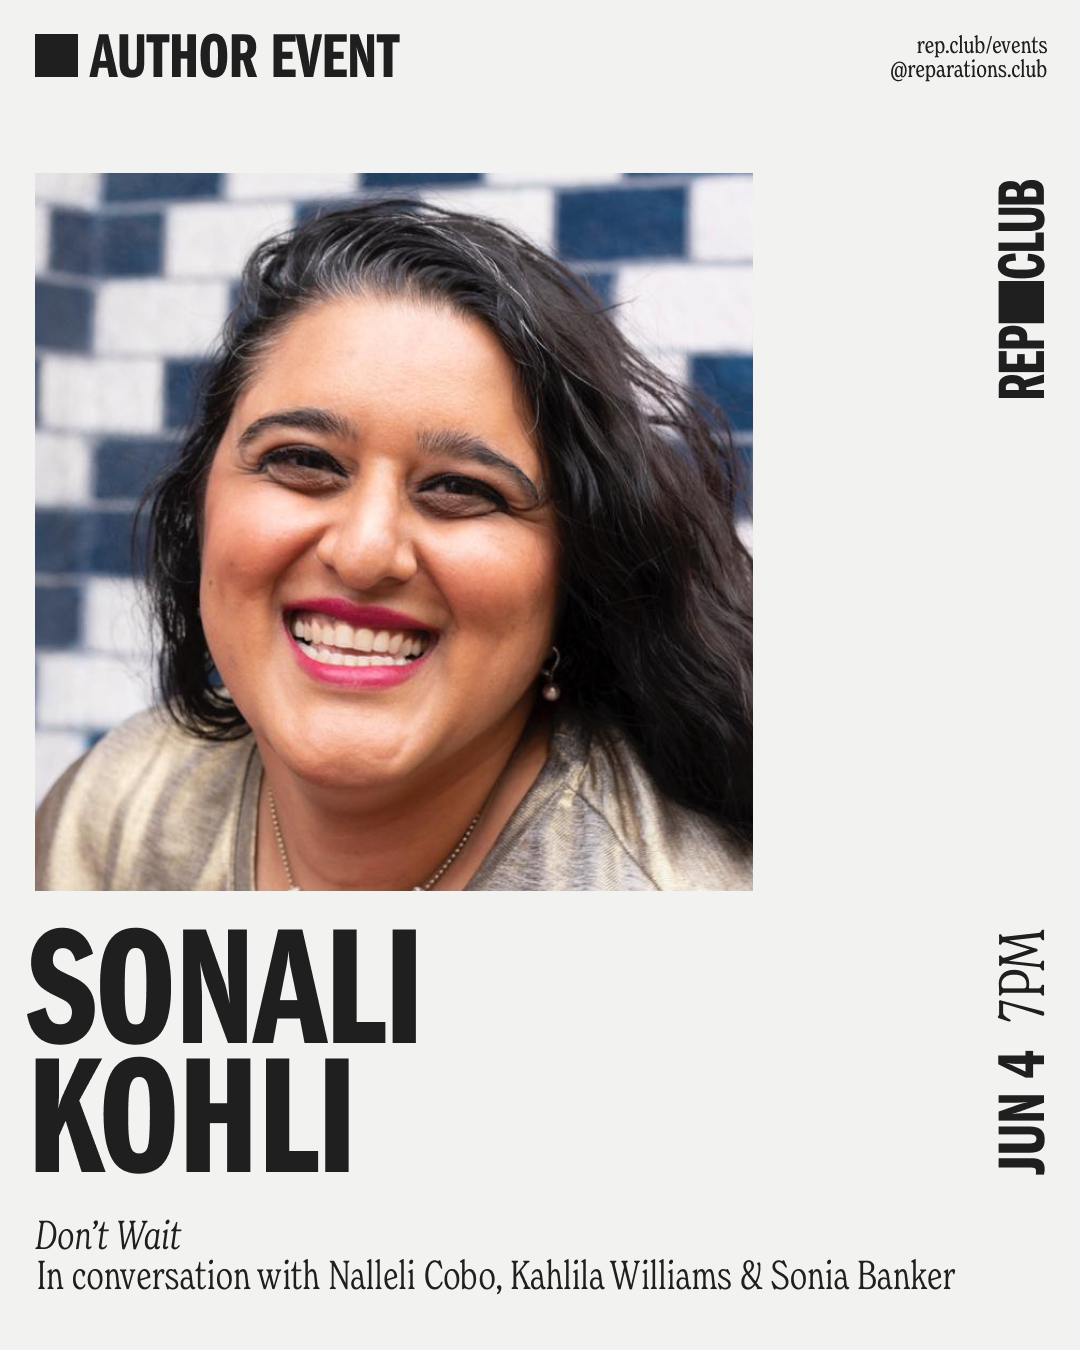 June 4th EVENT: Don't Wait // Three Girls Who Fought for Change and Won w/ Sonali Kohli, Sonia Banker, Nalleli Cobo, + Kahlila Williams